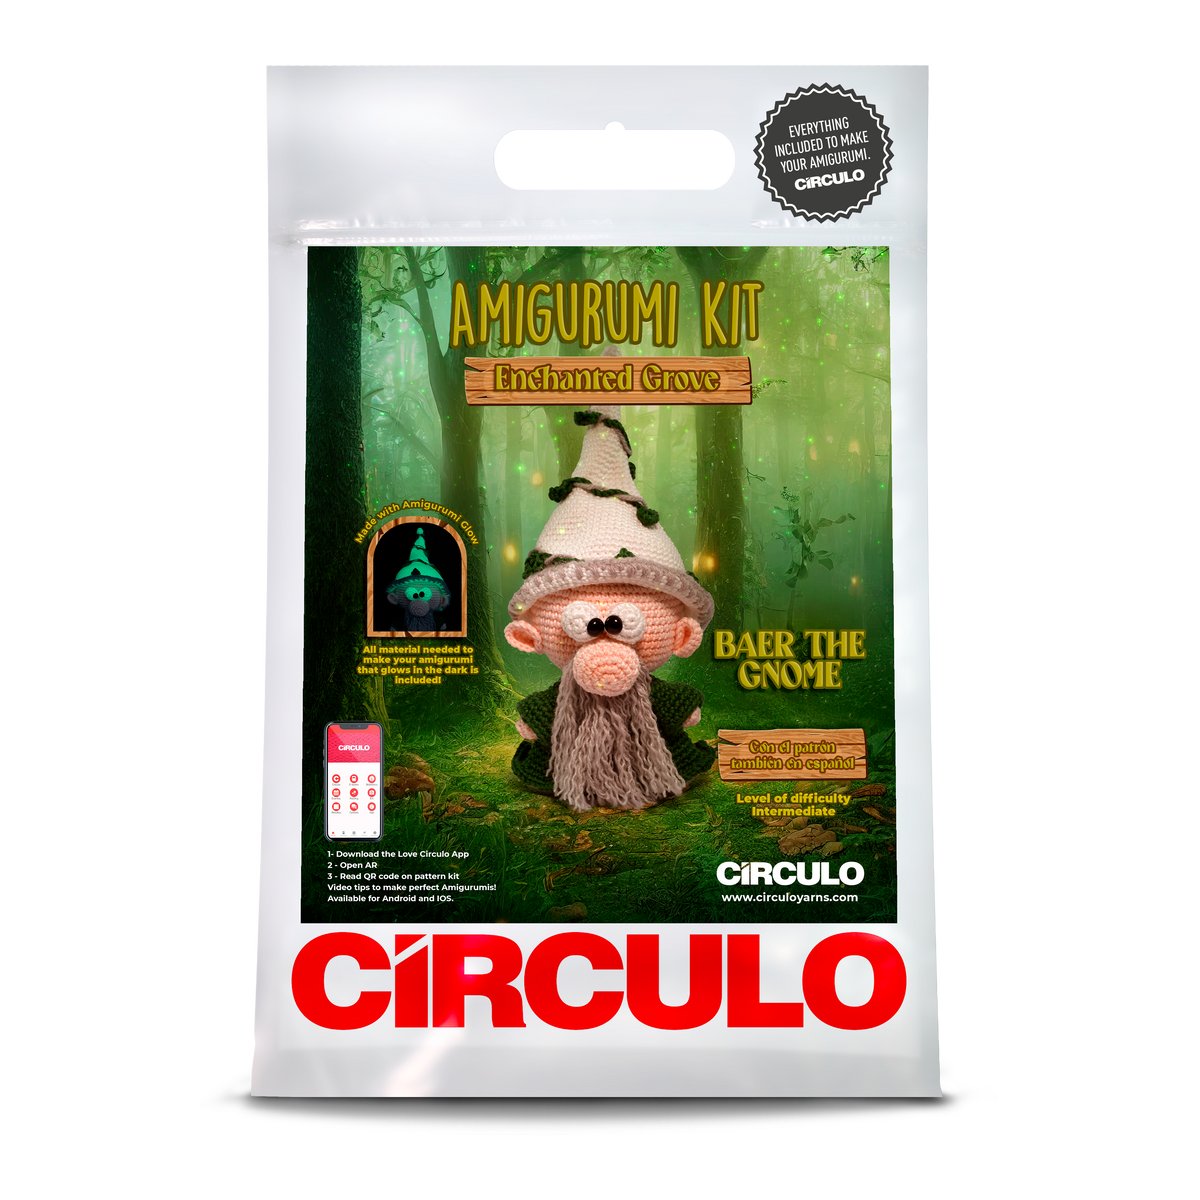 Circulo Amigurumi Enchanted Grove Kits